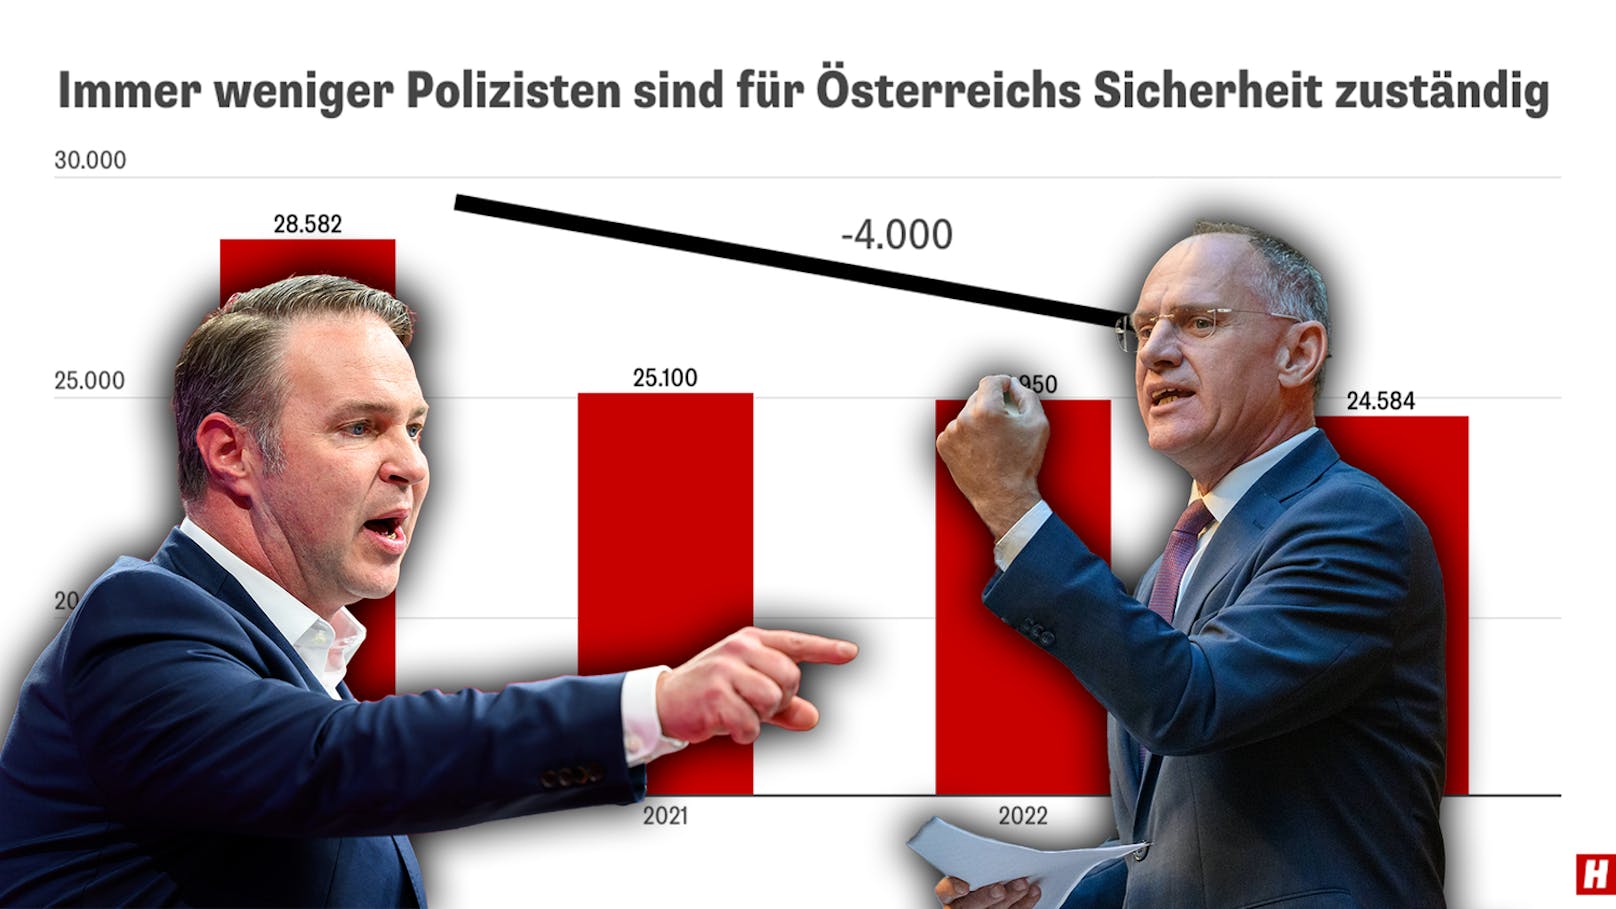 "Einfach weggelassen": Ministerium zerpflückt SPÖ-Daten